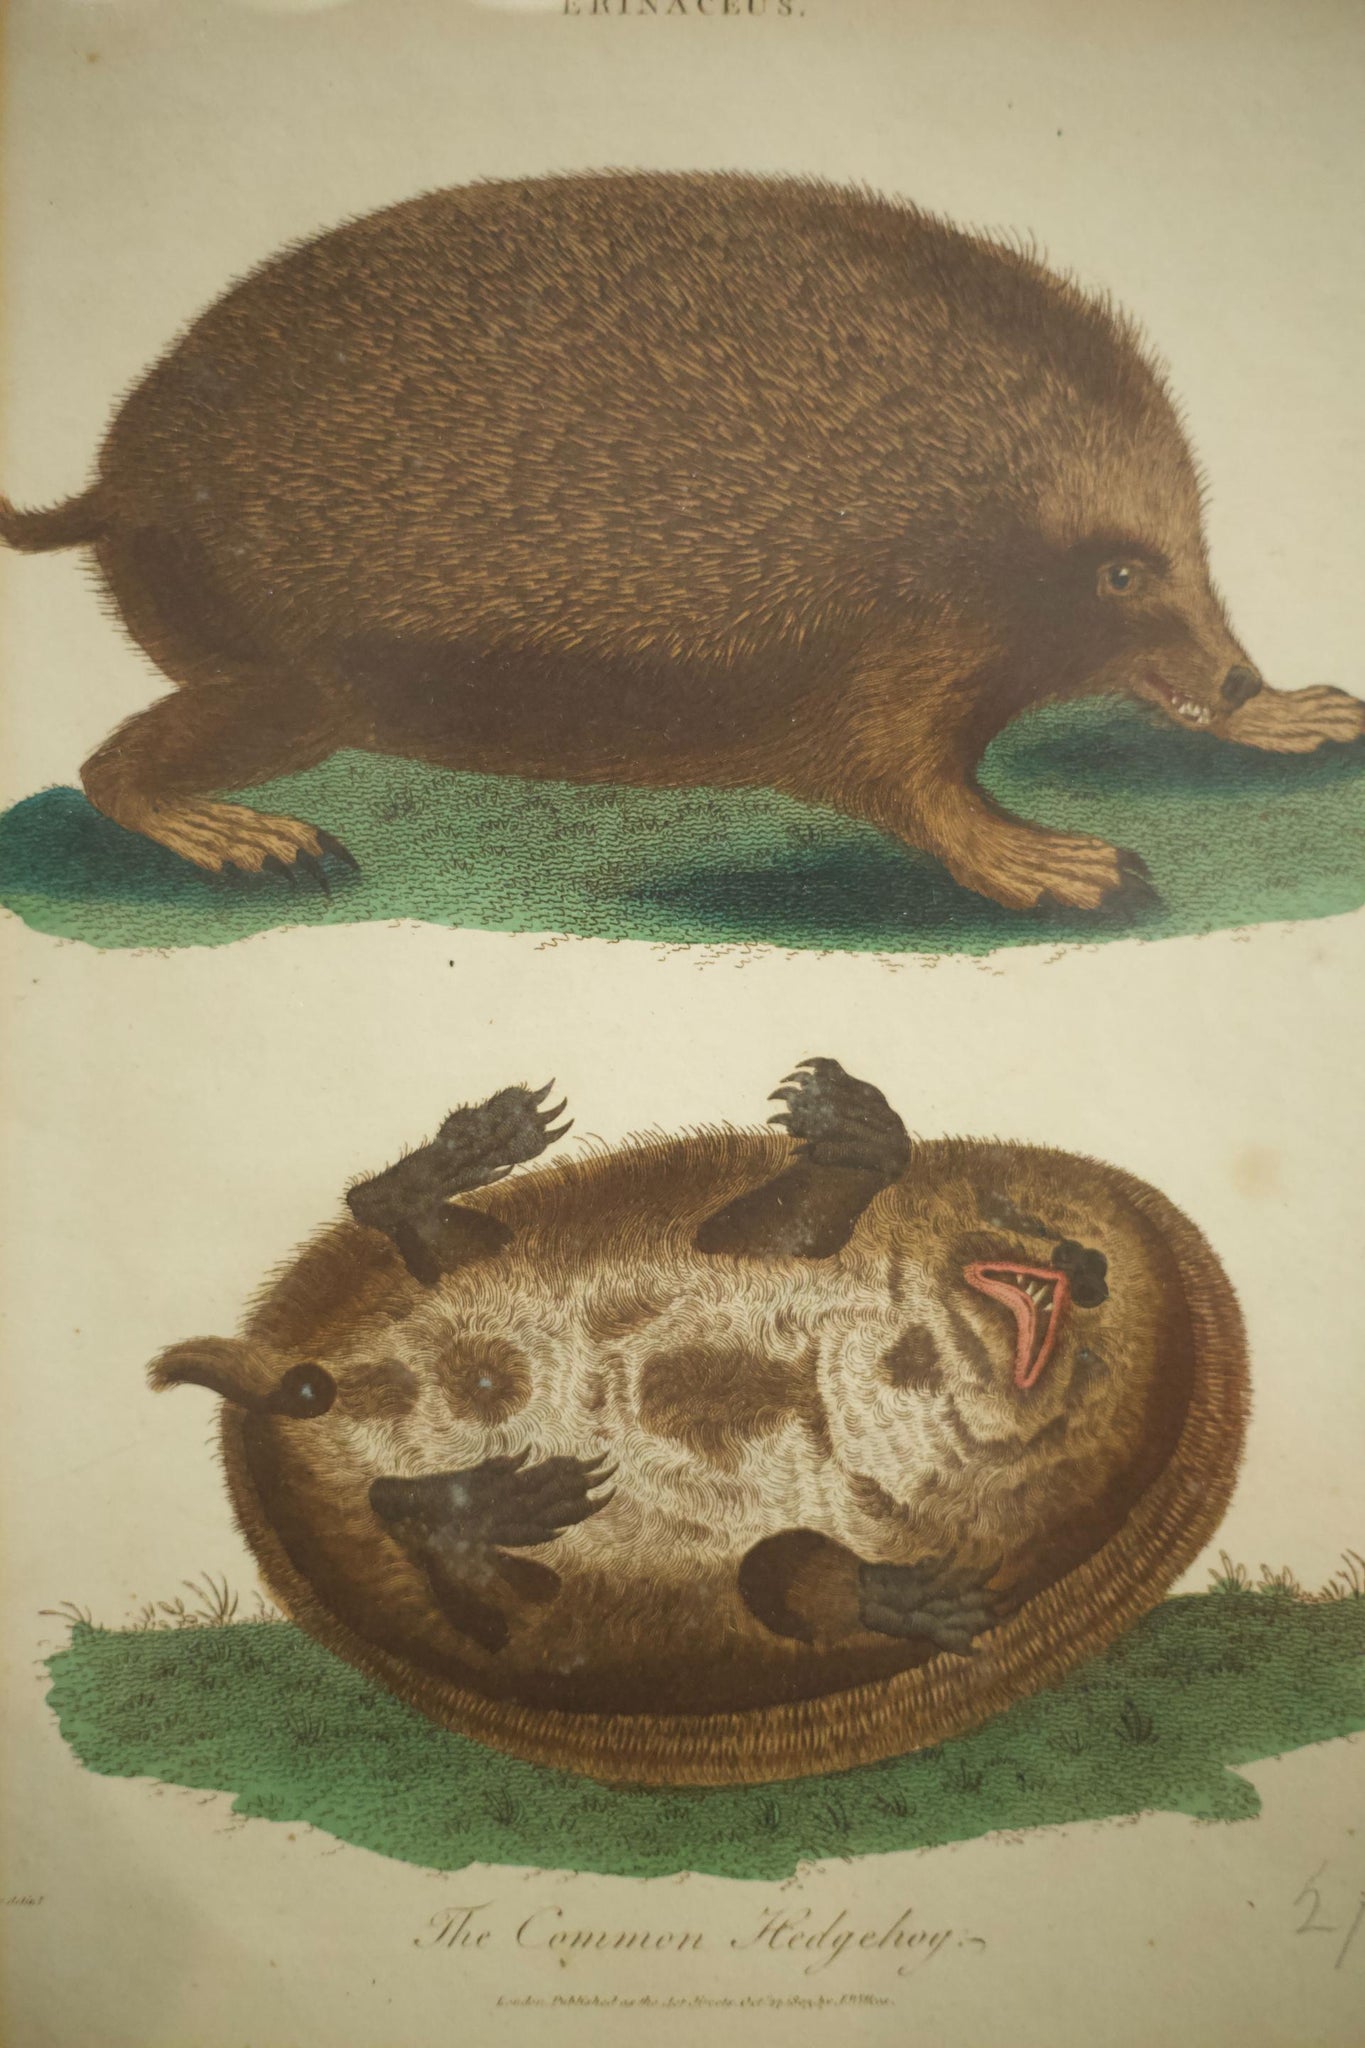 18th century book plate of a hedgehog